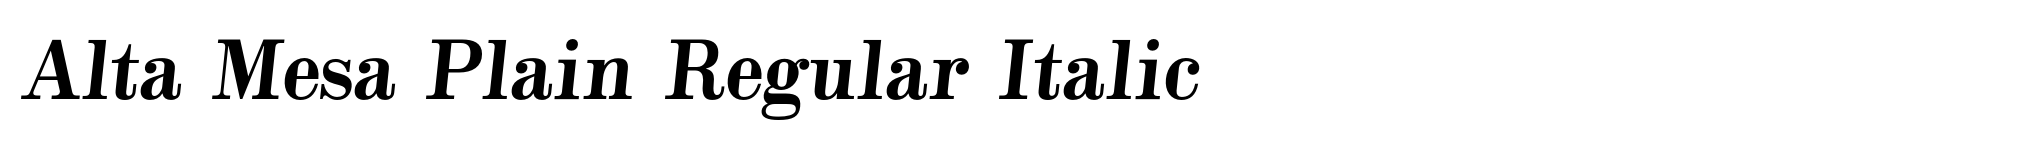 Alta Mesa Plain Regular Italic image